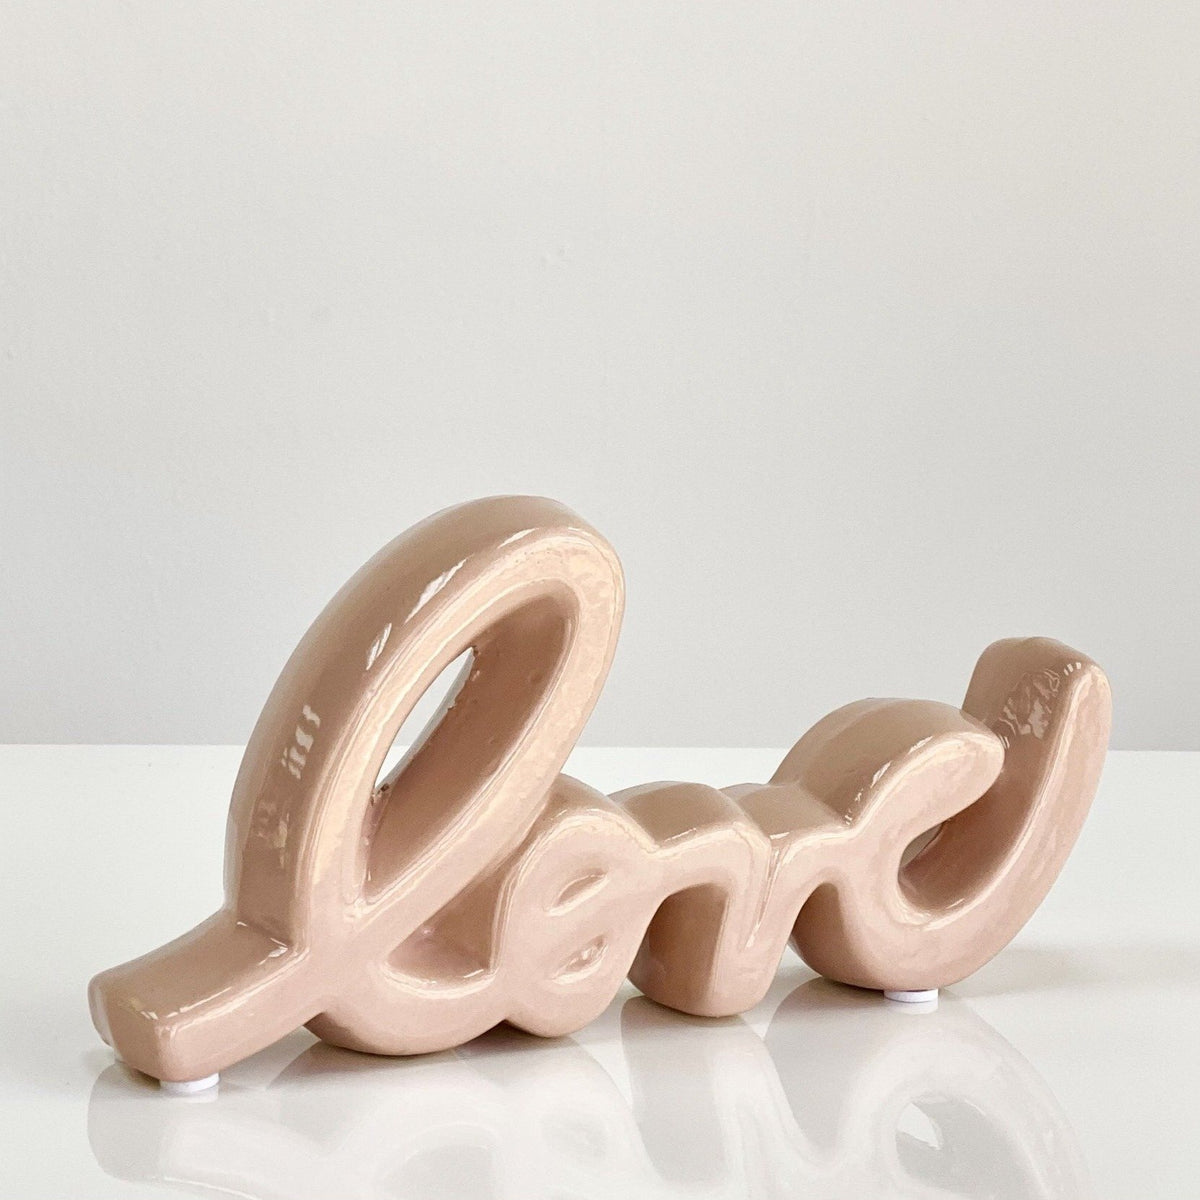 Ceramic Love Word Blush Pink Table Top